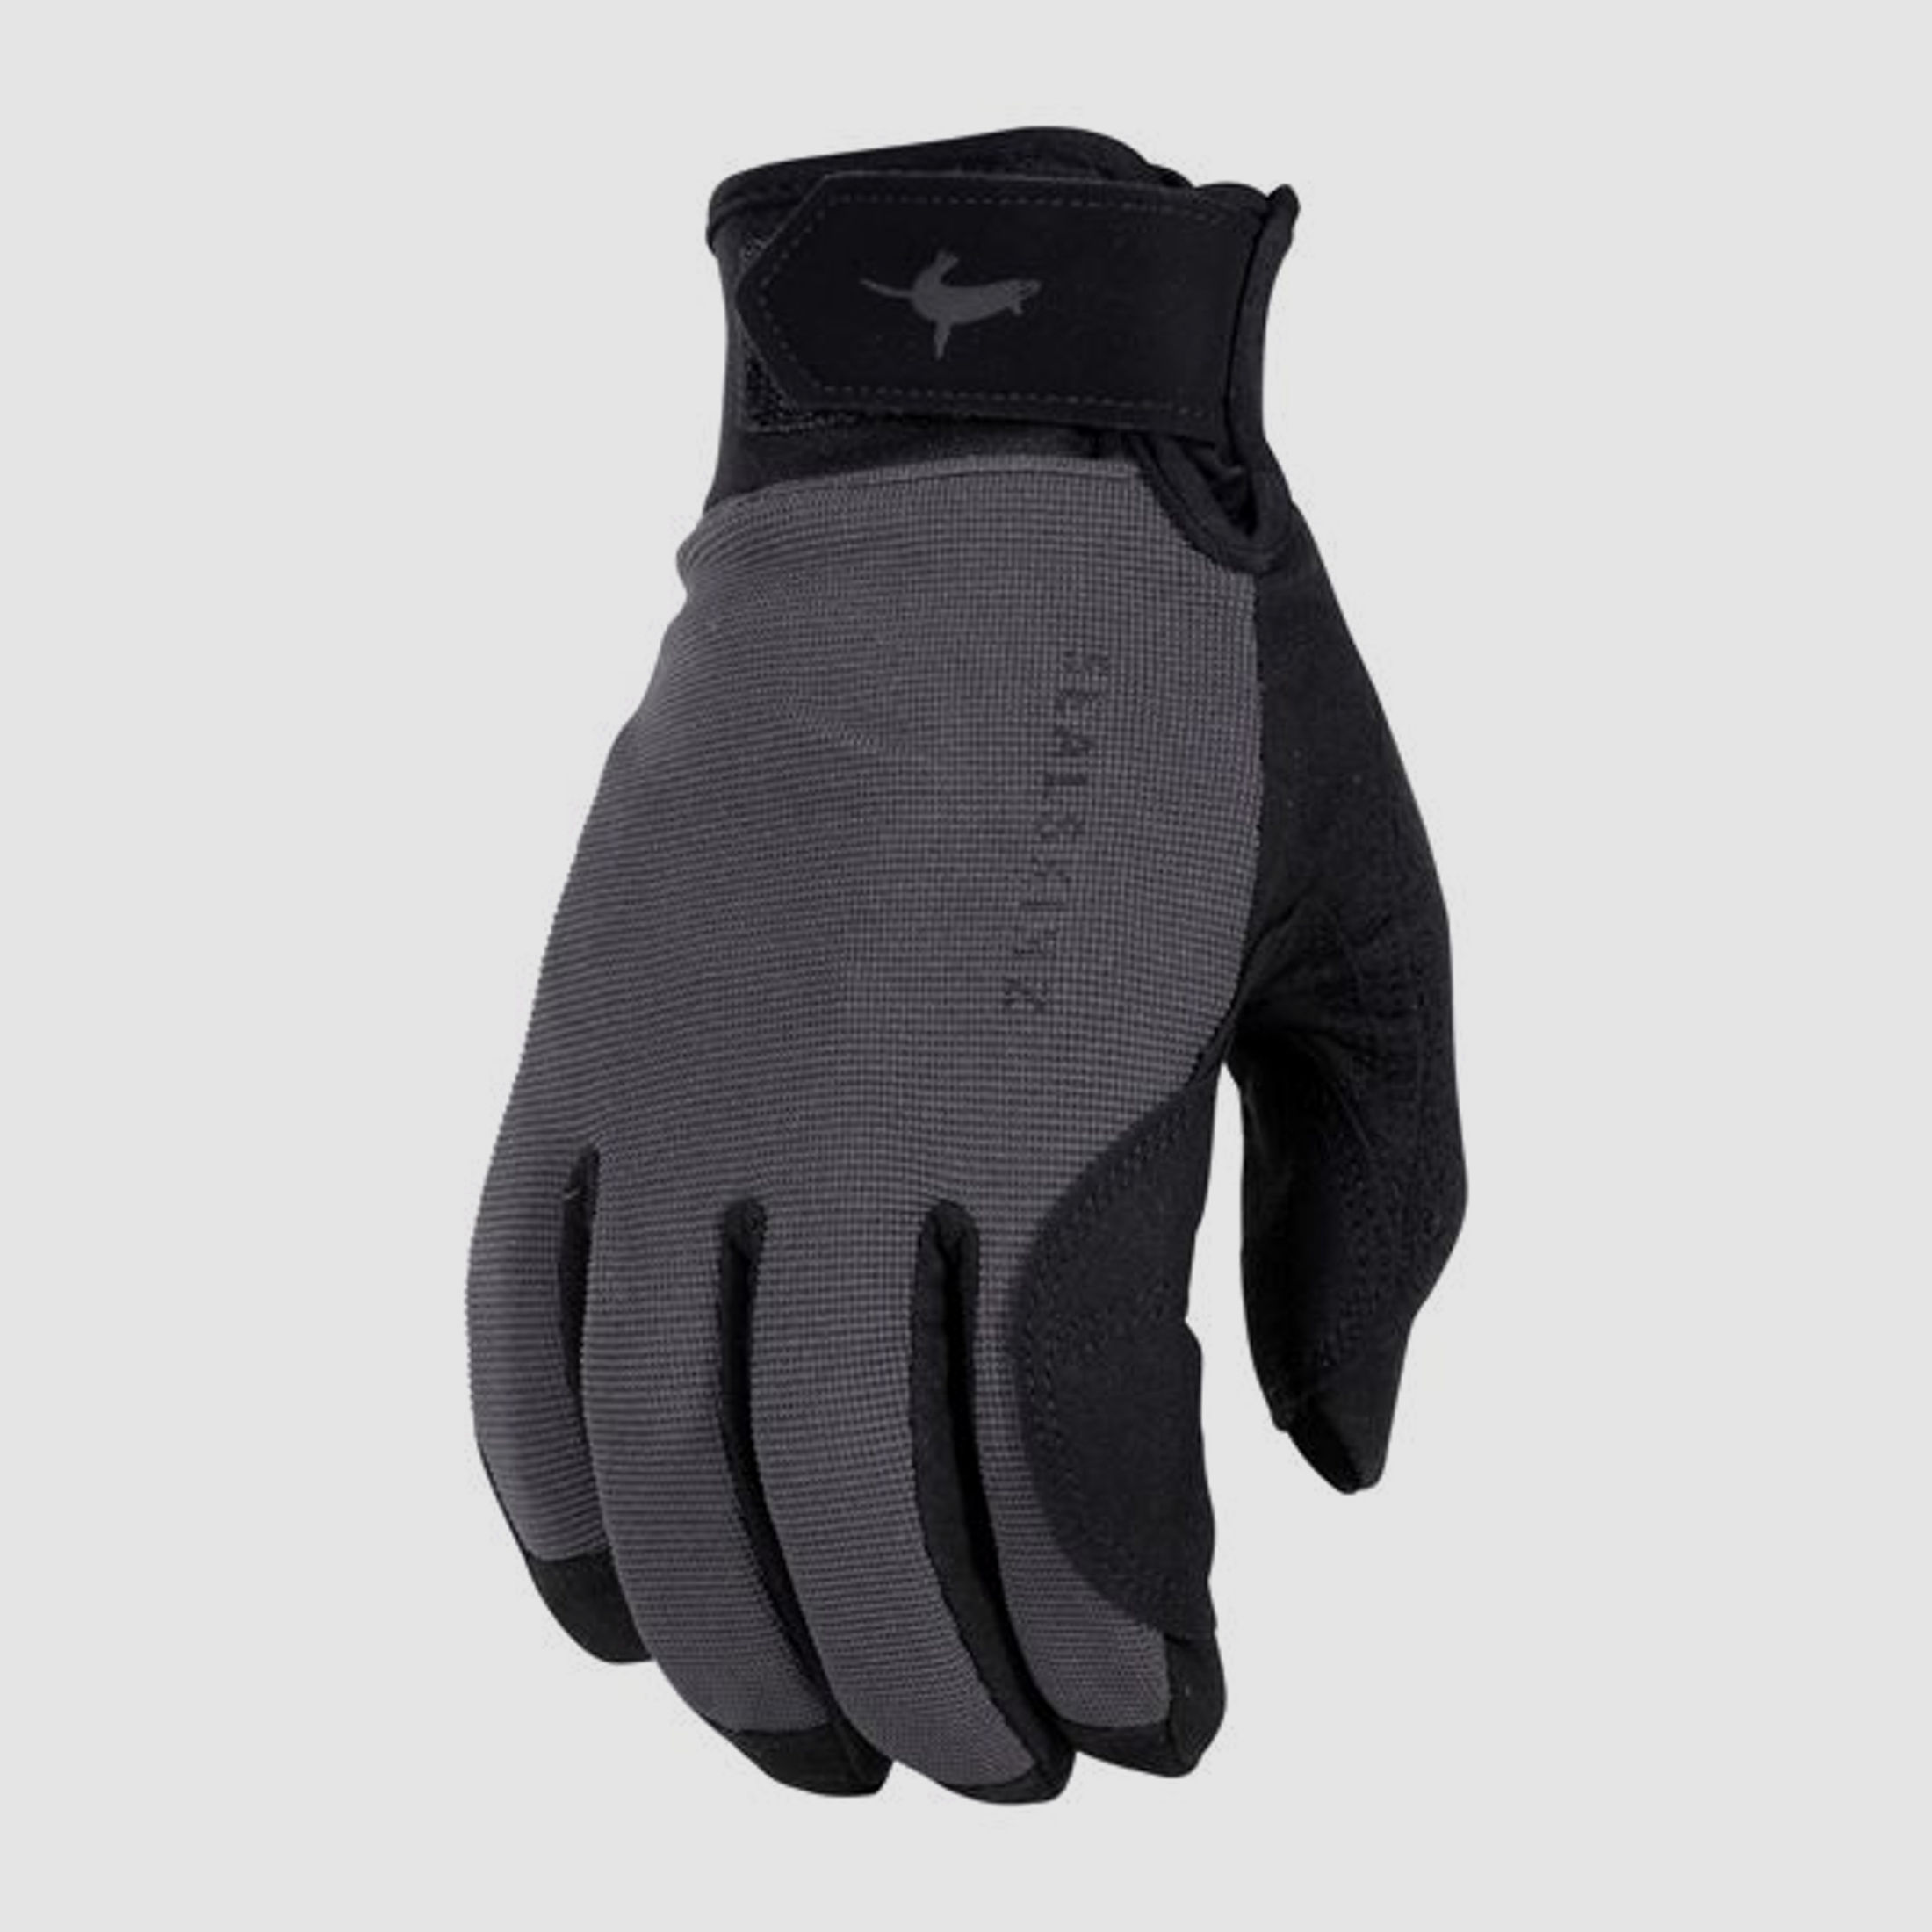 SealSkinz Sealskinz Allwetter-Handschuhe Harling schwarz grau